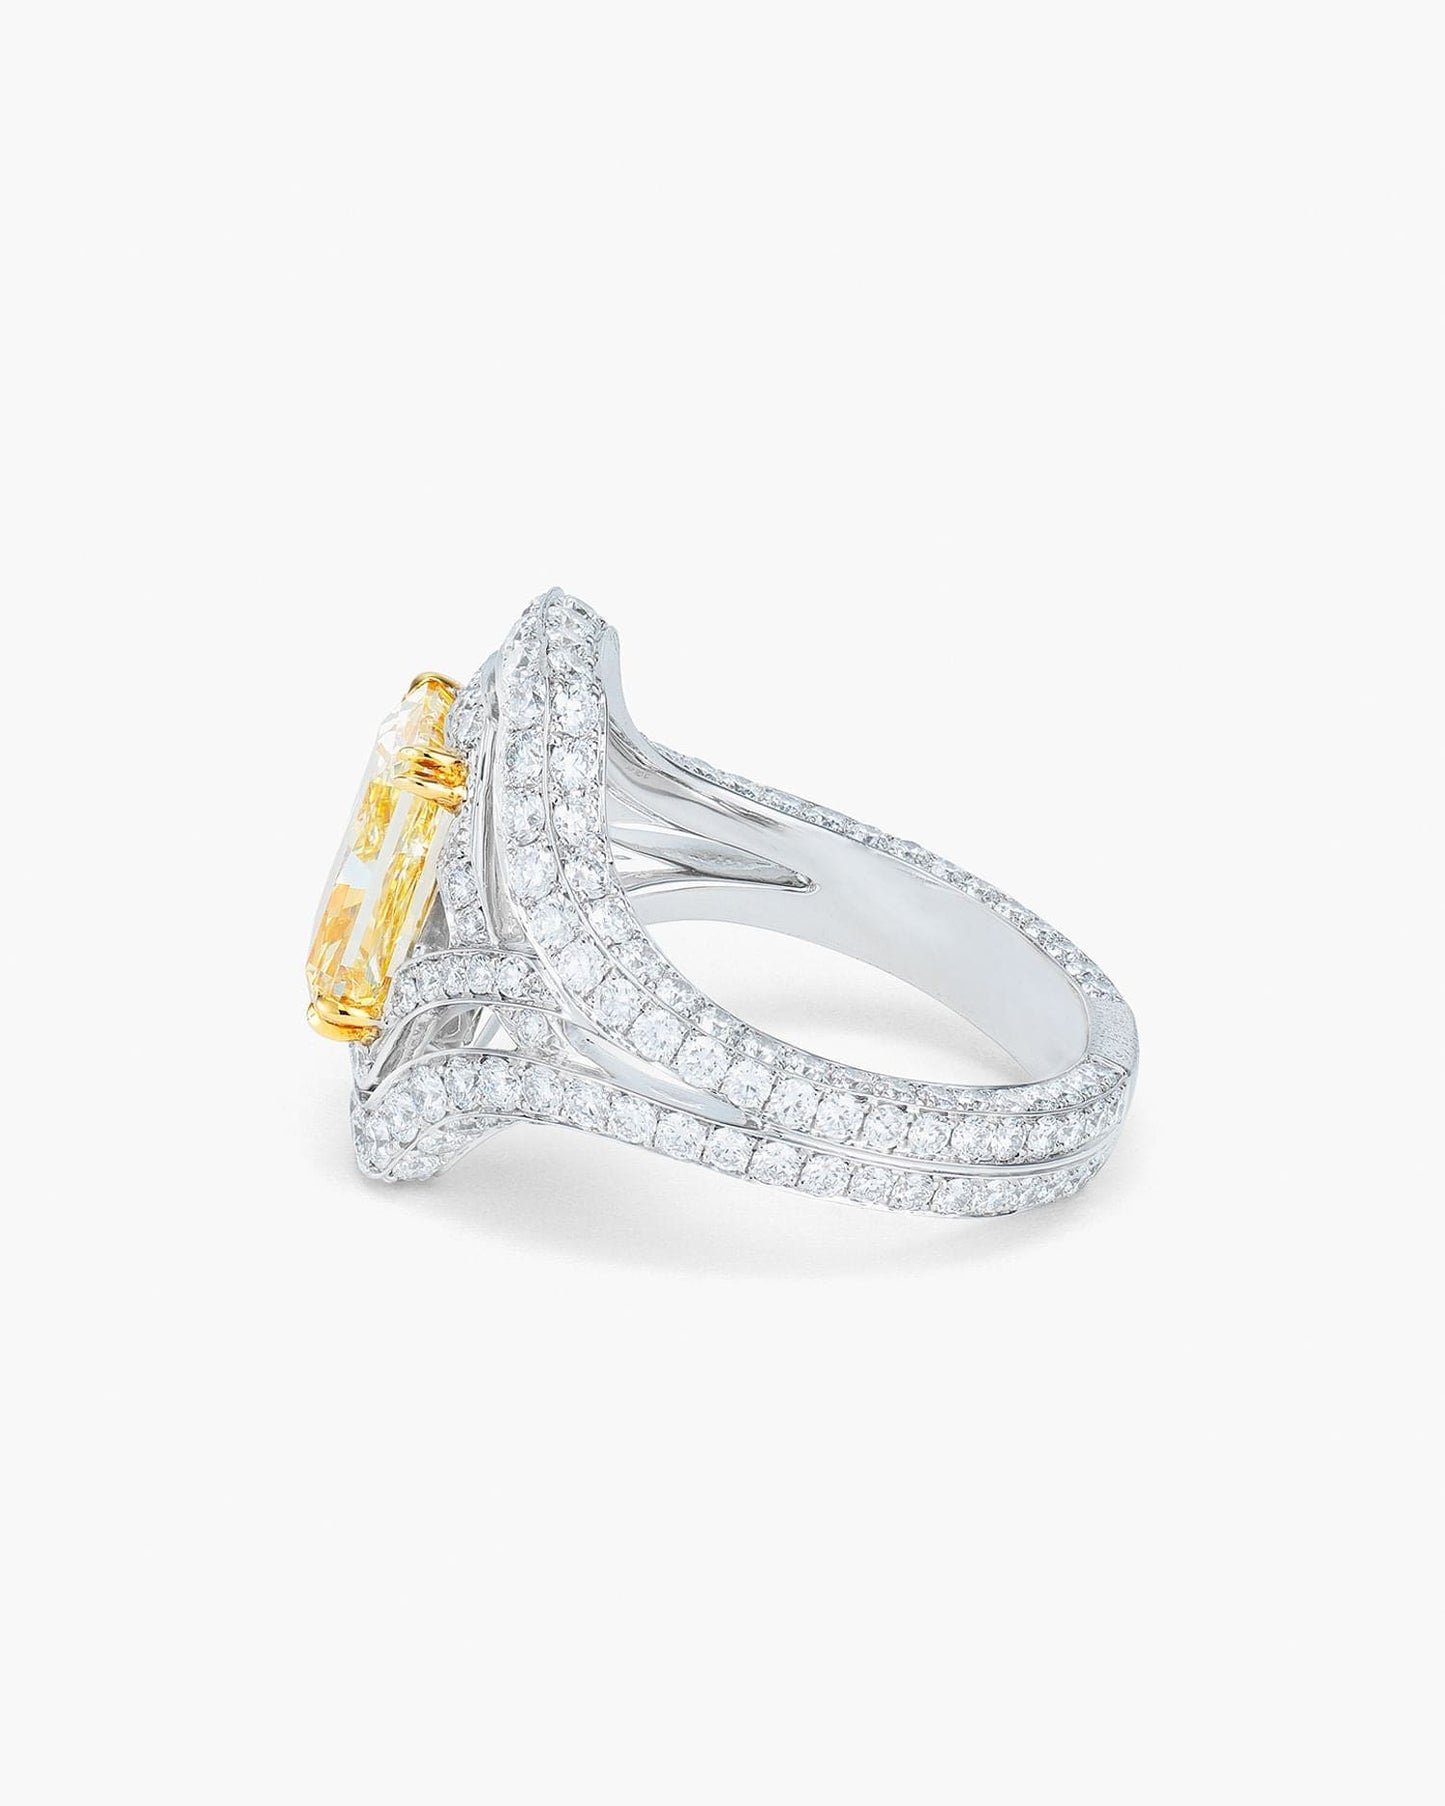 3.06 carat Radiant Cut Yellow and White Diamond Ring